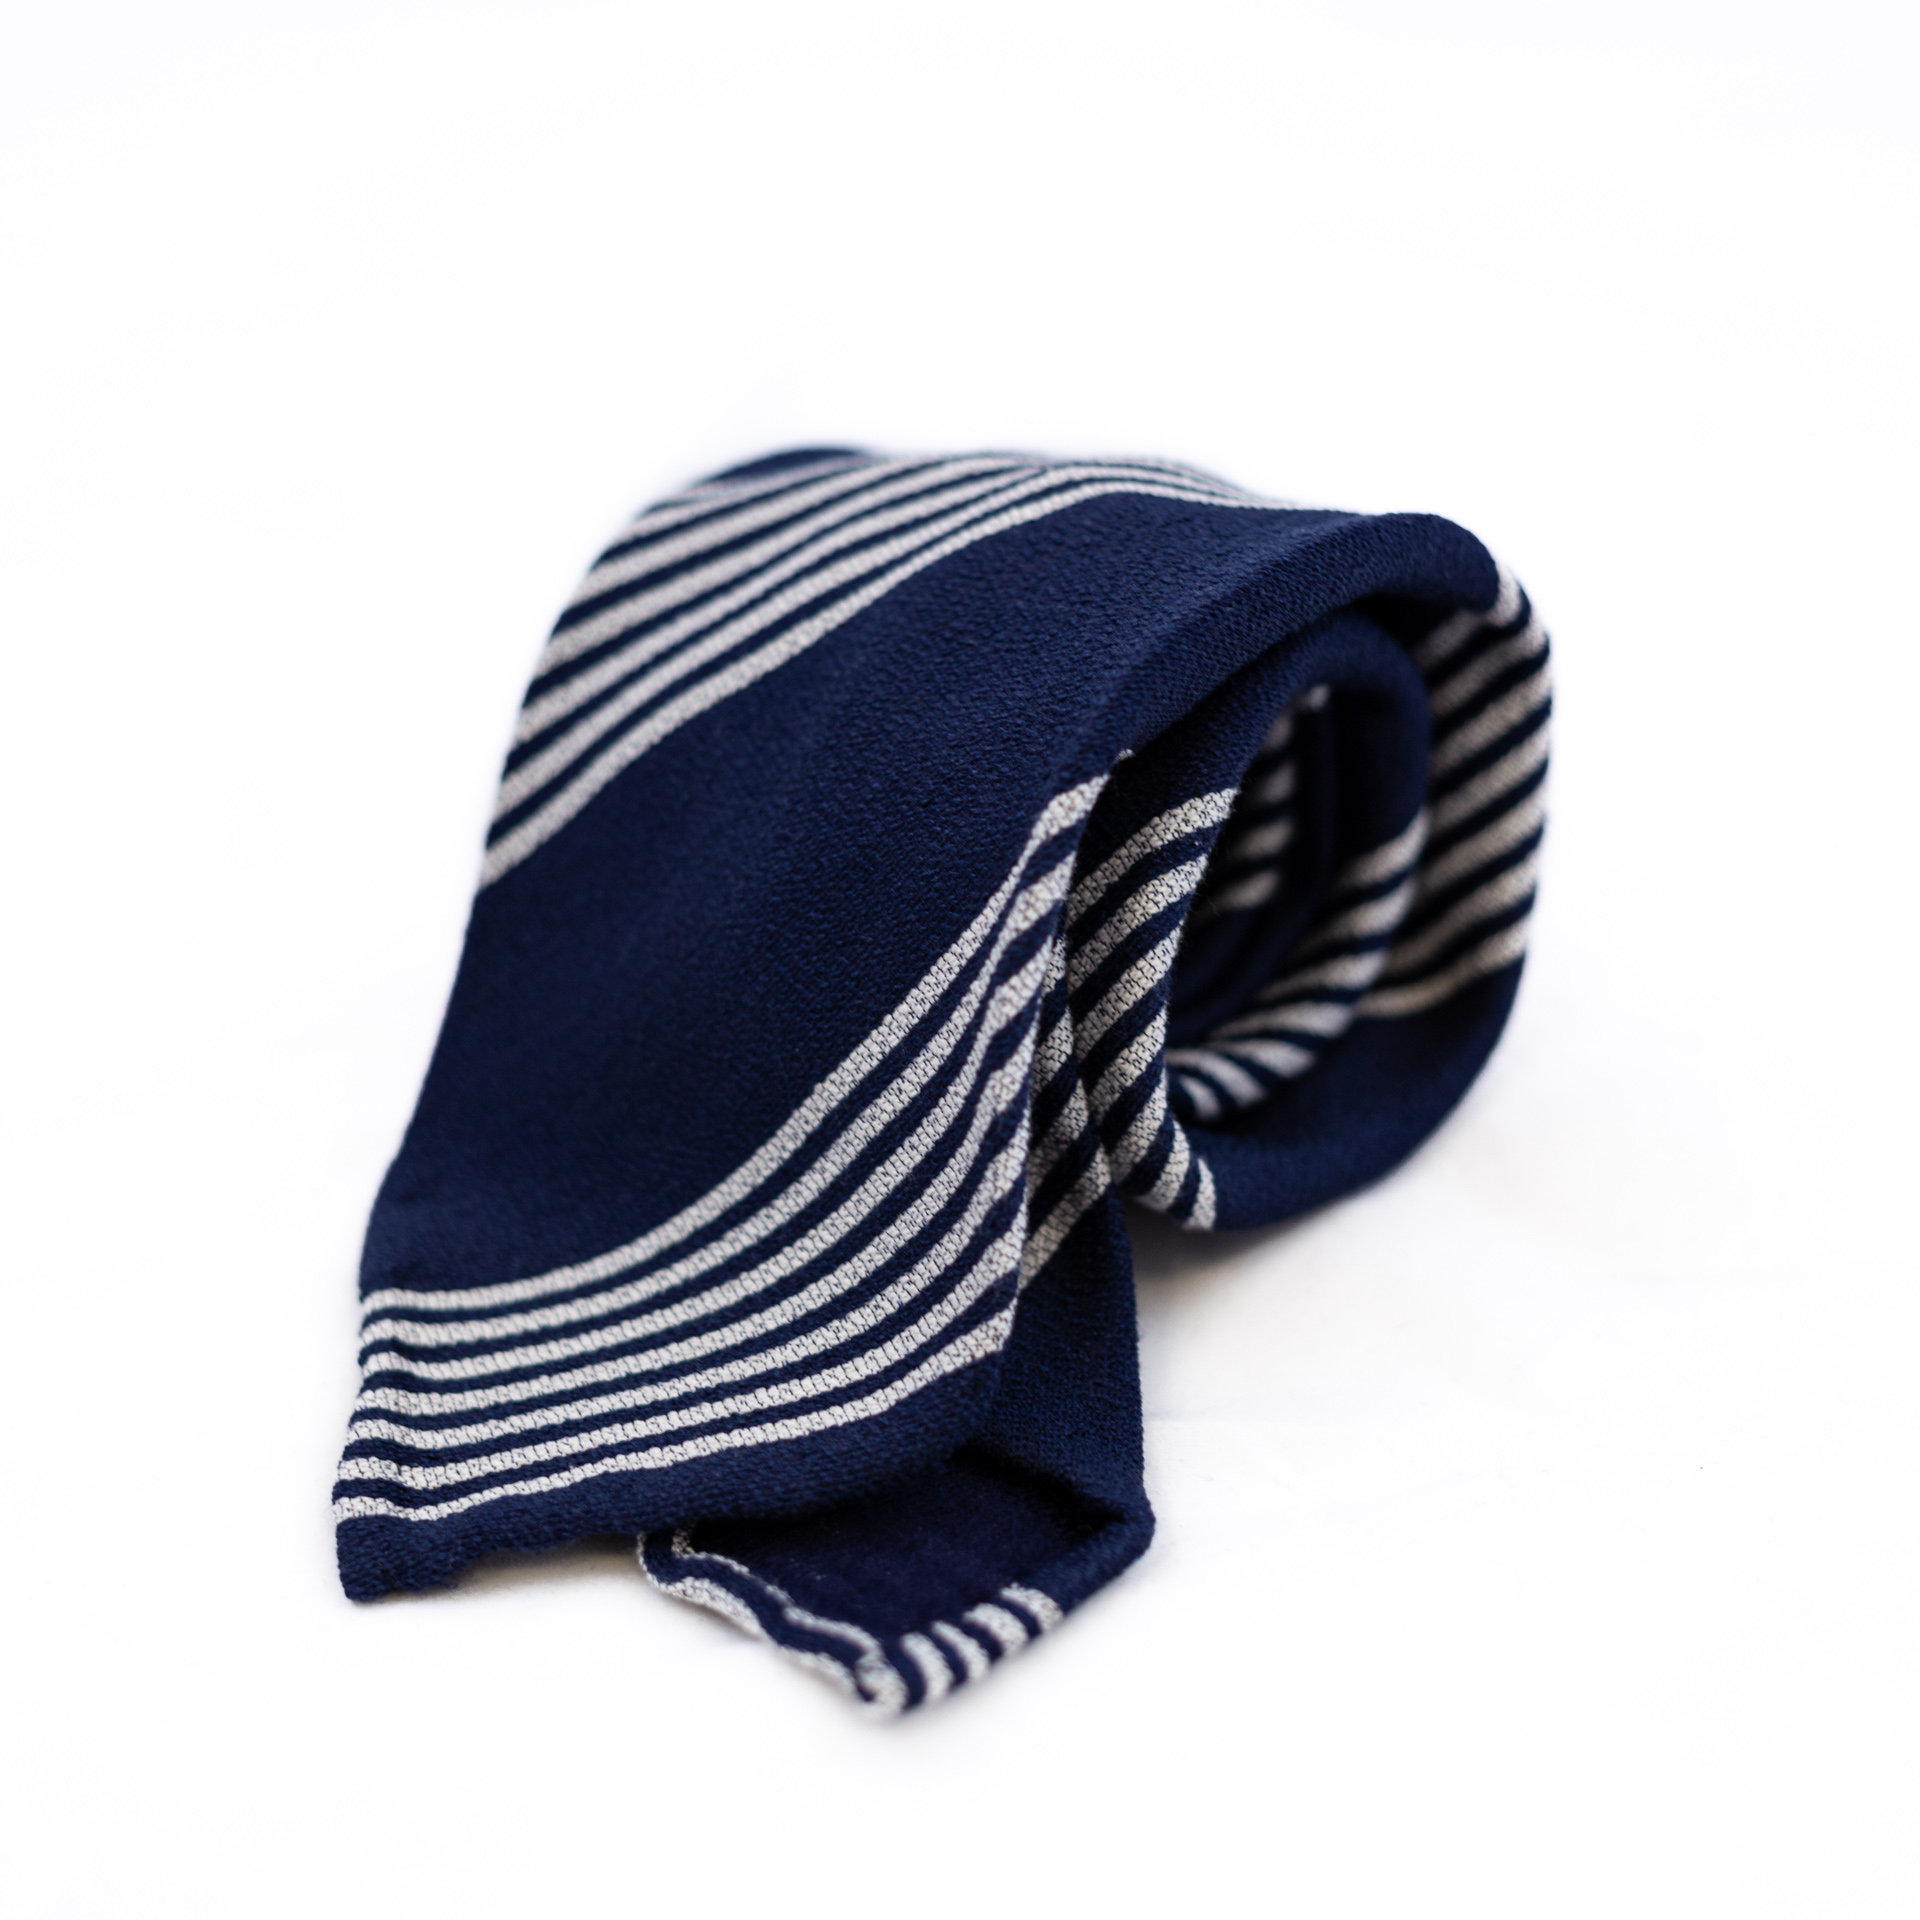 DLA 5-fold navy and white striped tie folded